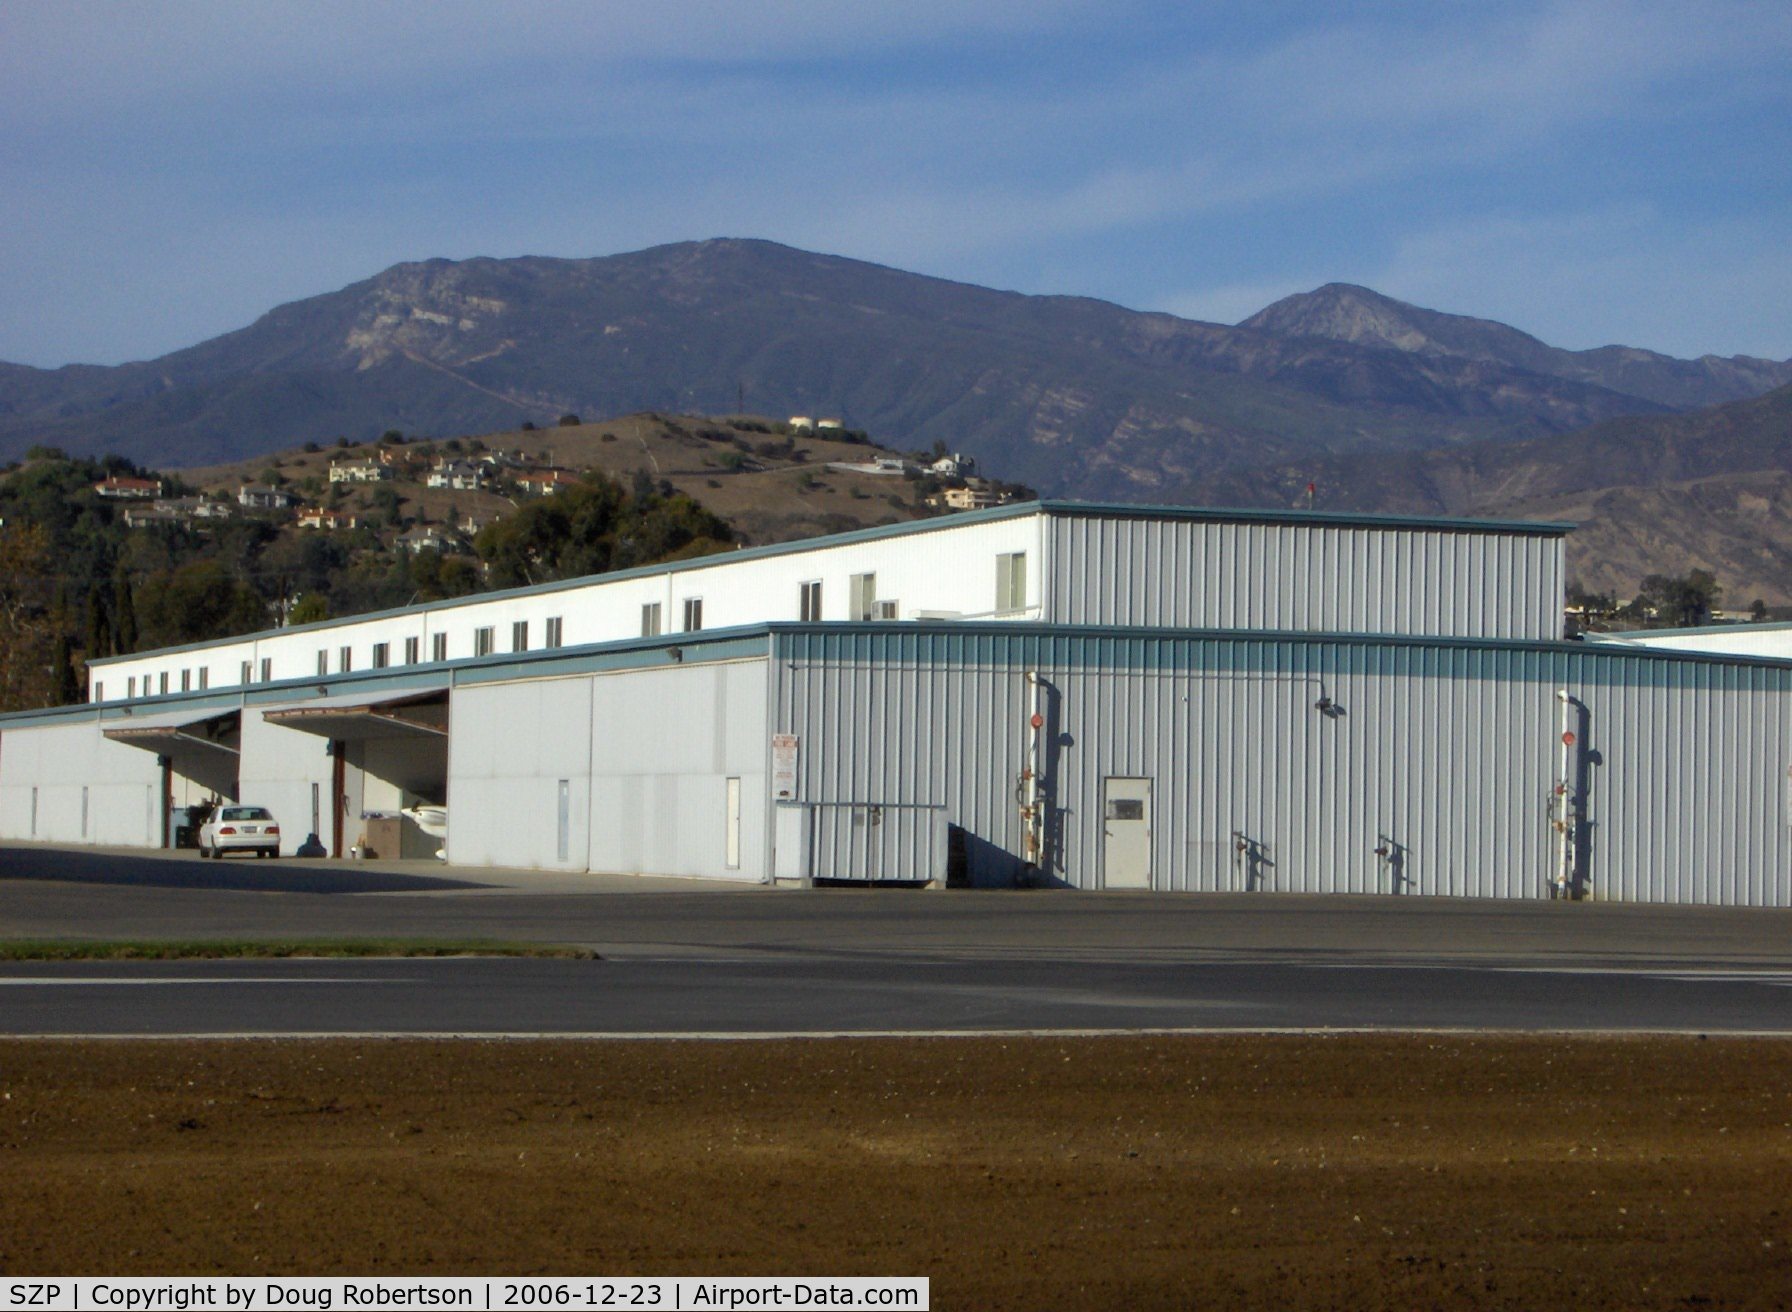 Santa Paula Airport (SZP) - Newer Hangars, Topa Topa Mnts. in background-6,244 feet, Hines Peak 6,704 feet elevation